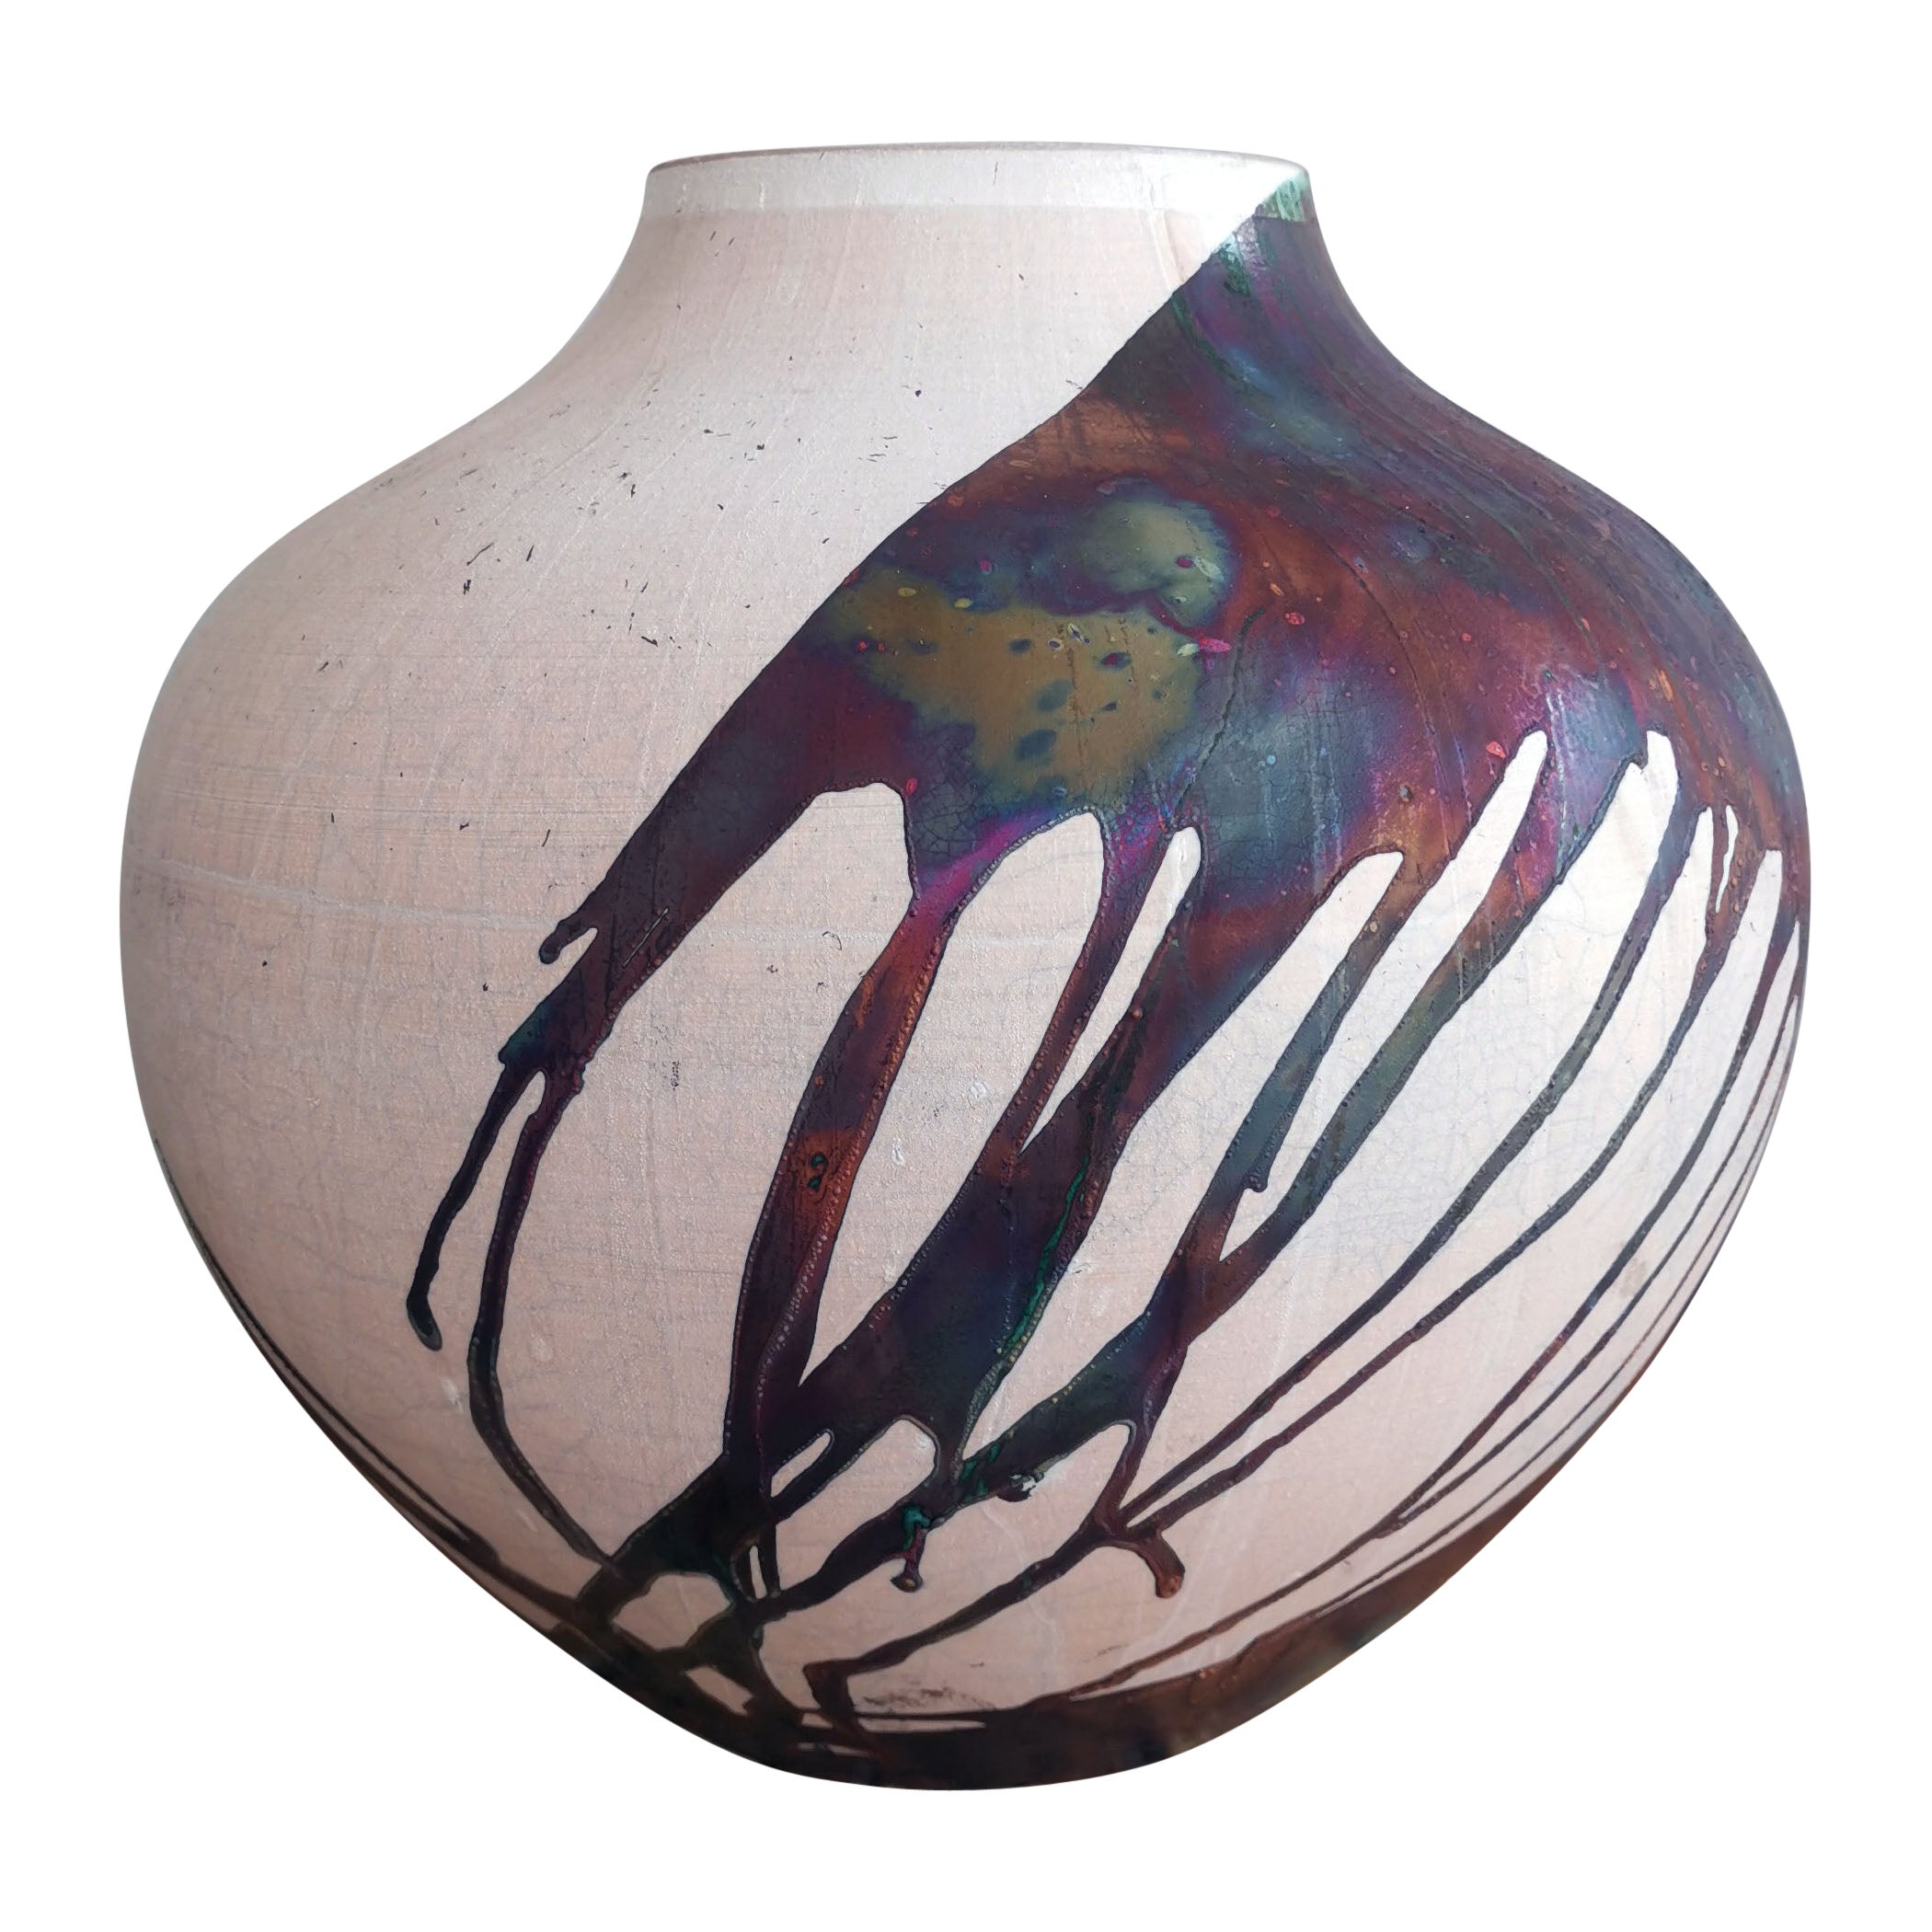 Pre-Order Raaquu Raku Keramikvase Große Issho 13,5 Keramik Vase - halber Kupfer Matt